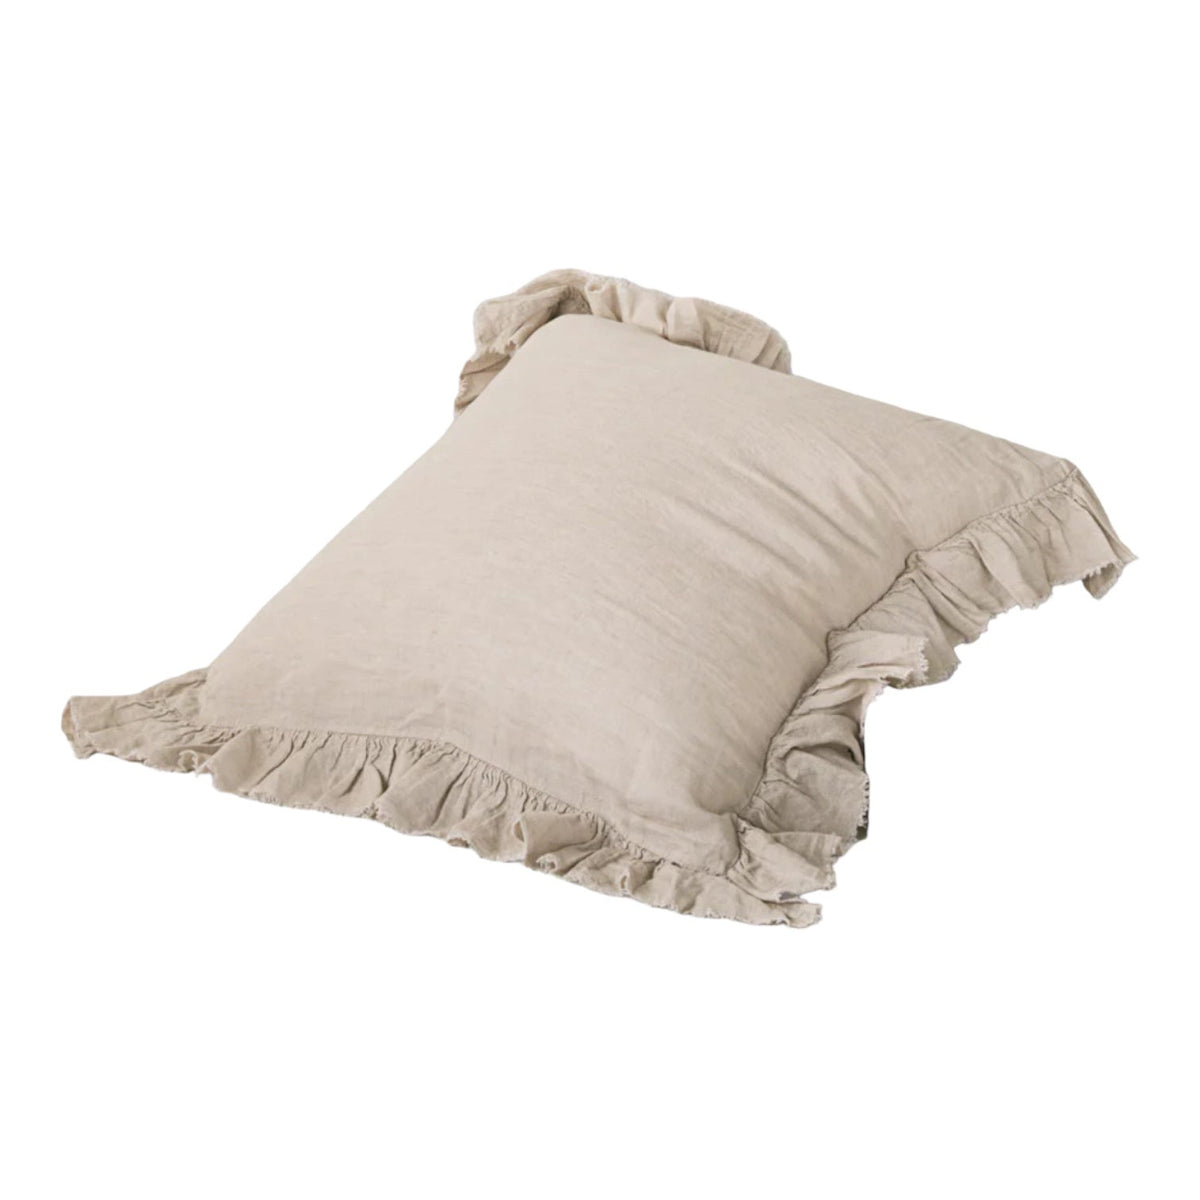 Kristine-Sable-European-Linen-Pillowcase Little & fox